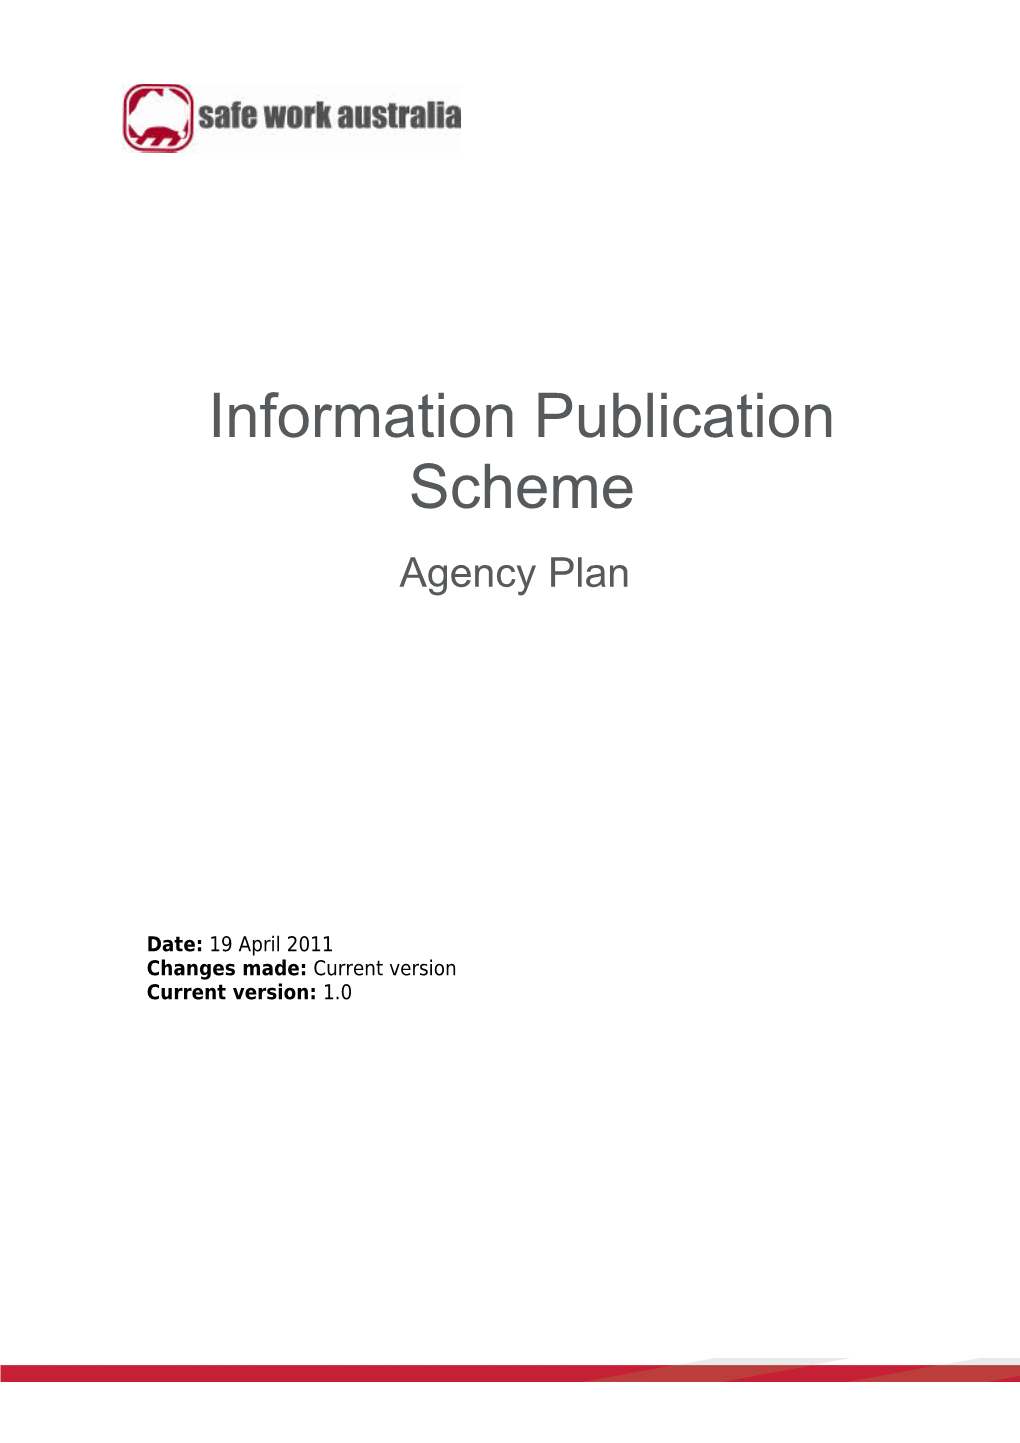 Information Publication Scheme - Agency Plan